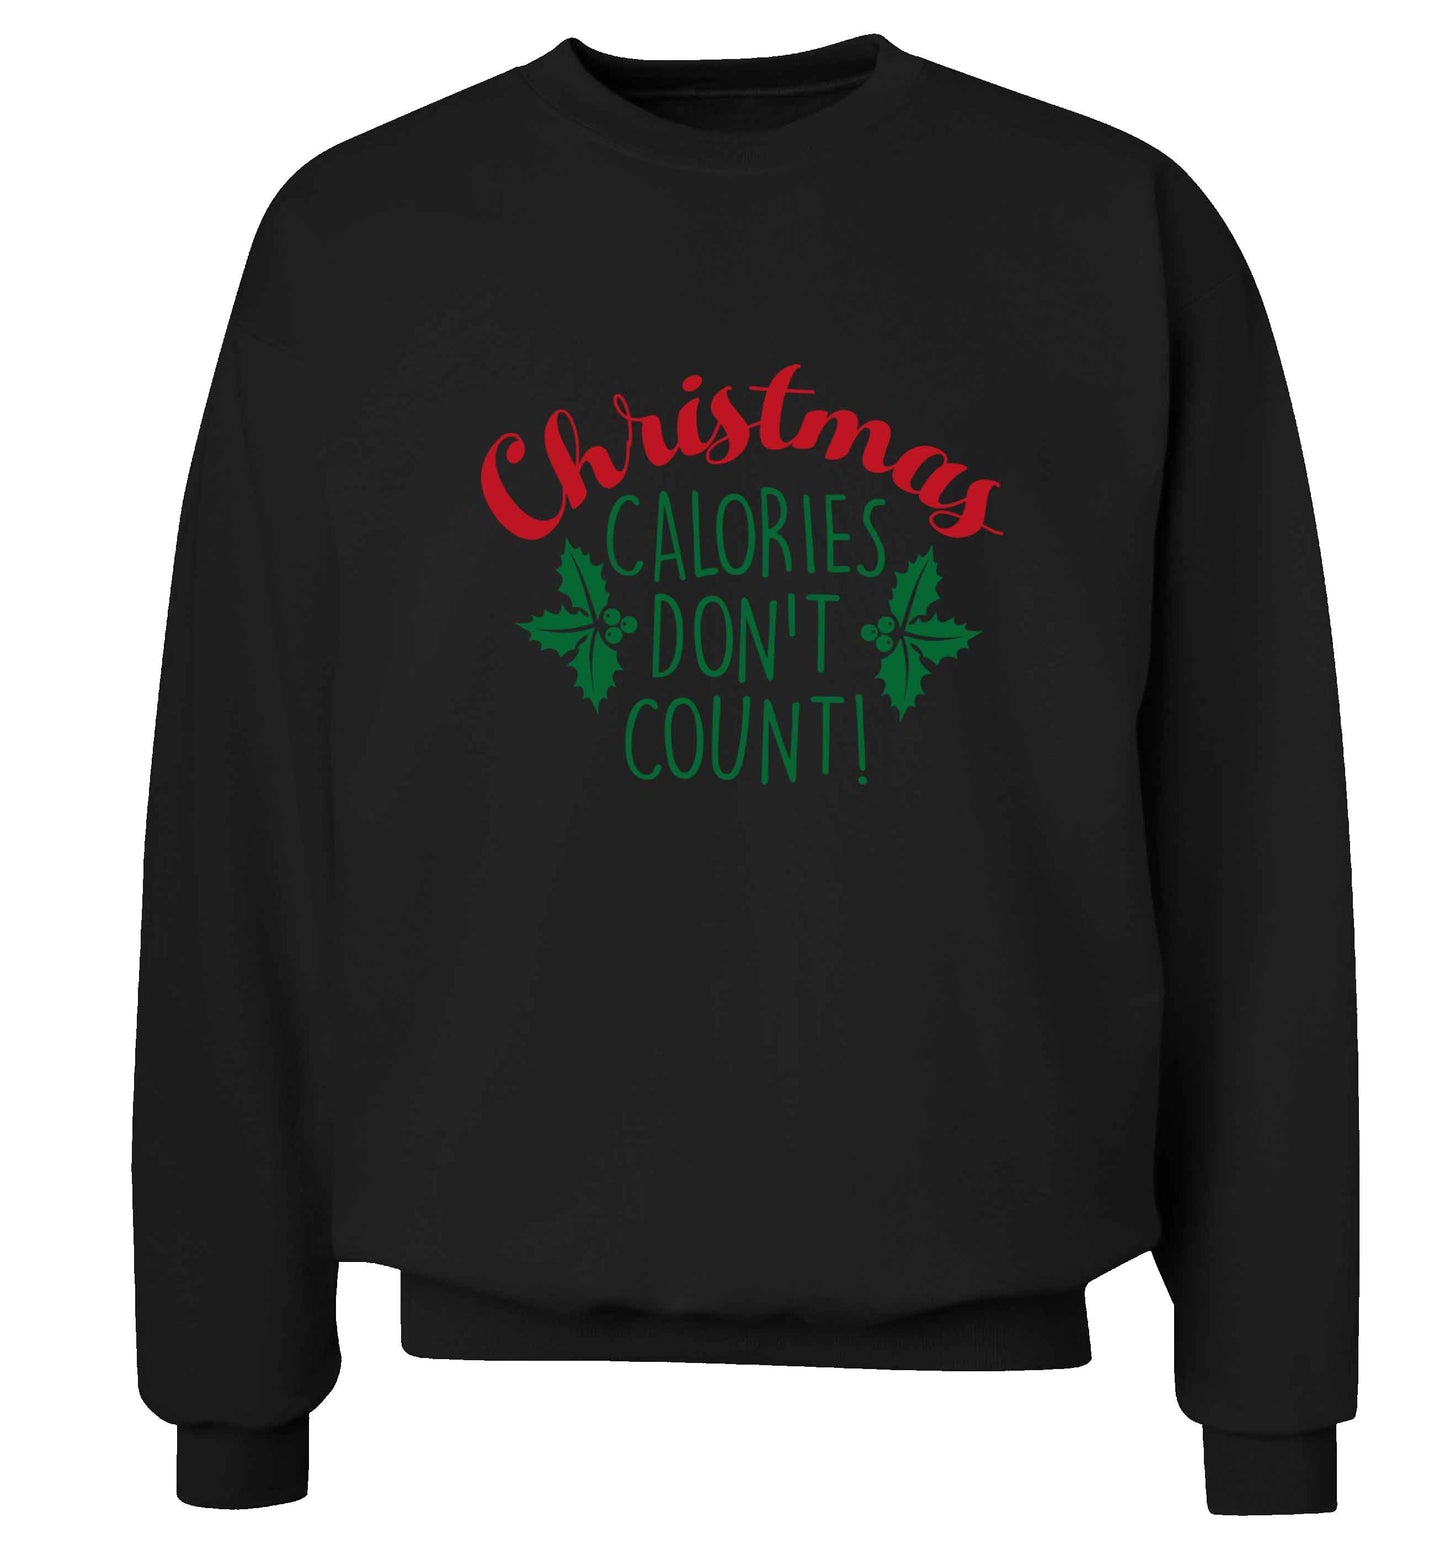 Christmas calories don't count adult's unisex black sweater 2XL